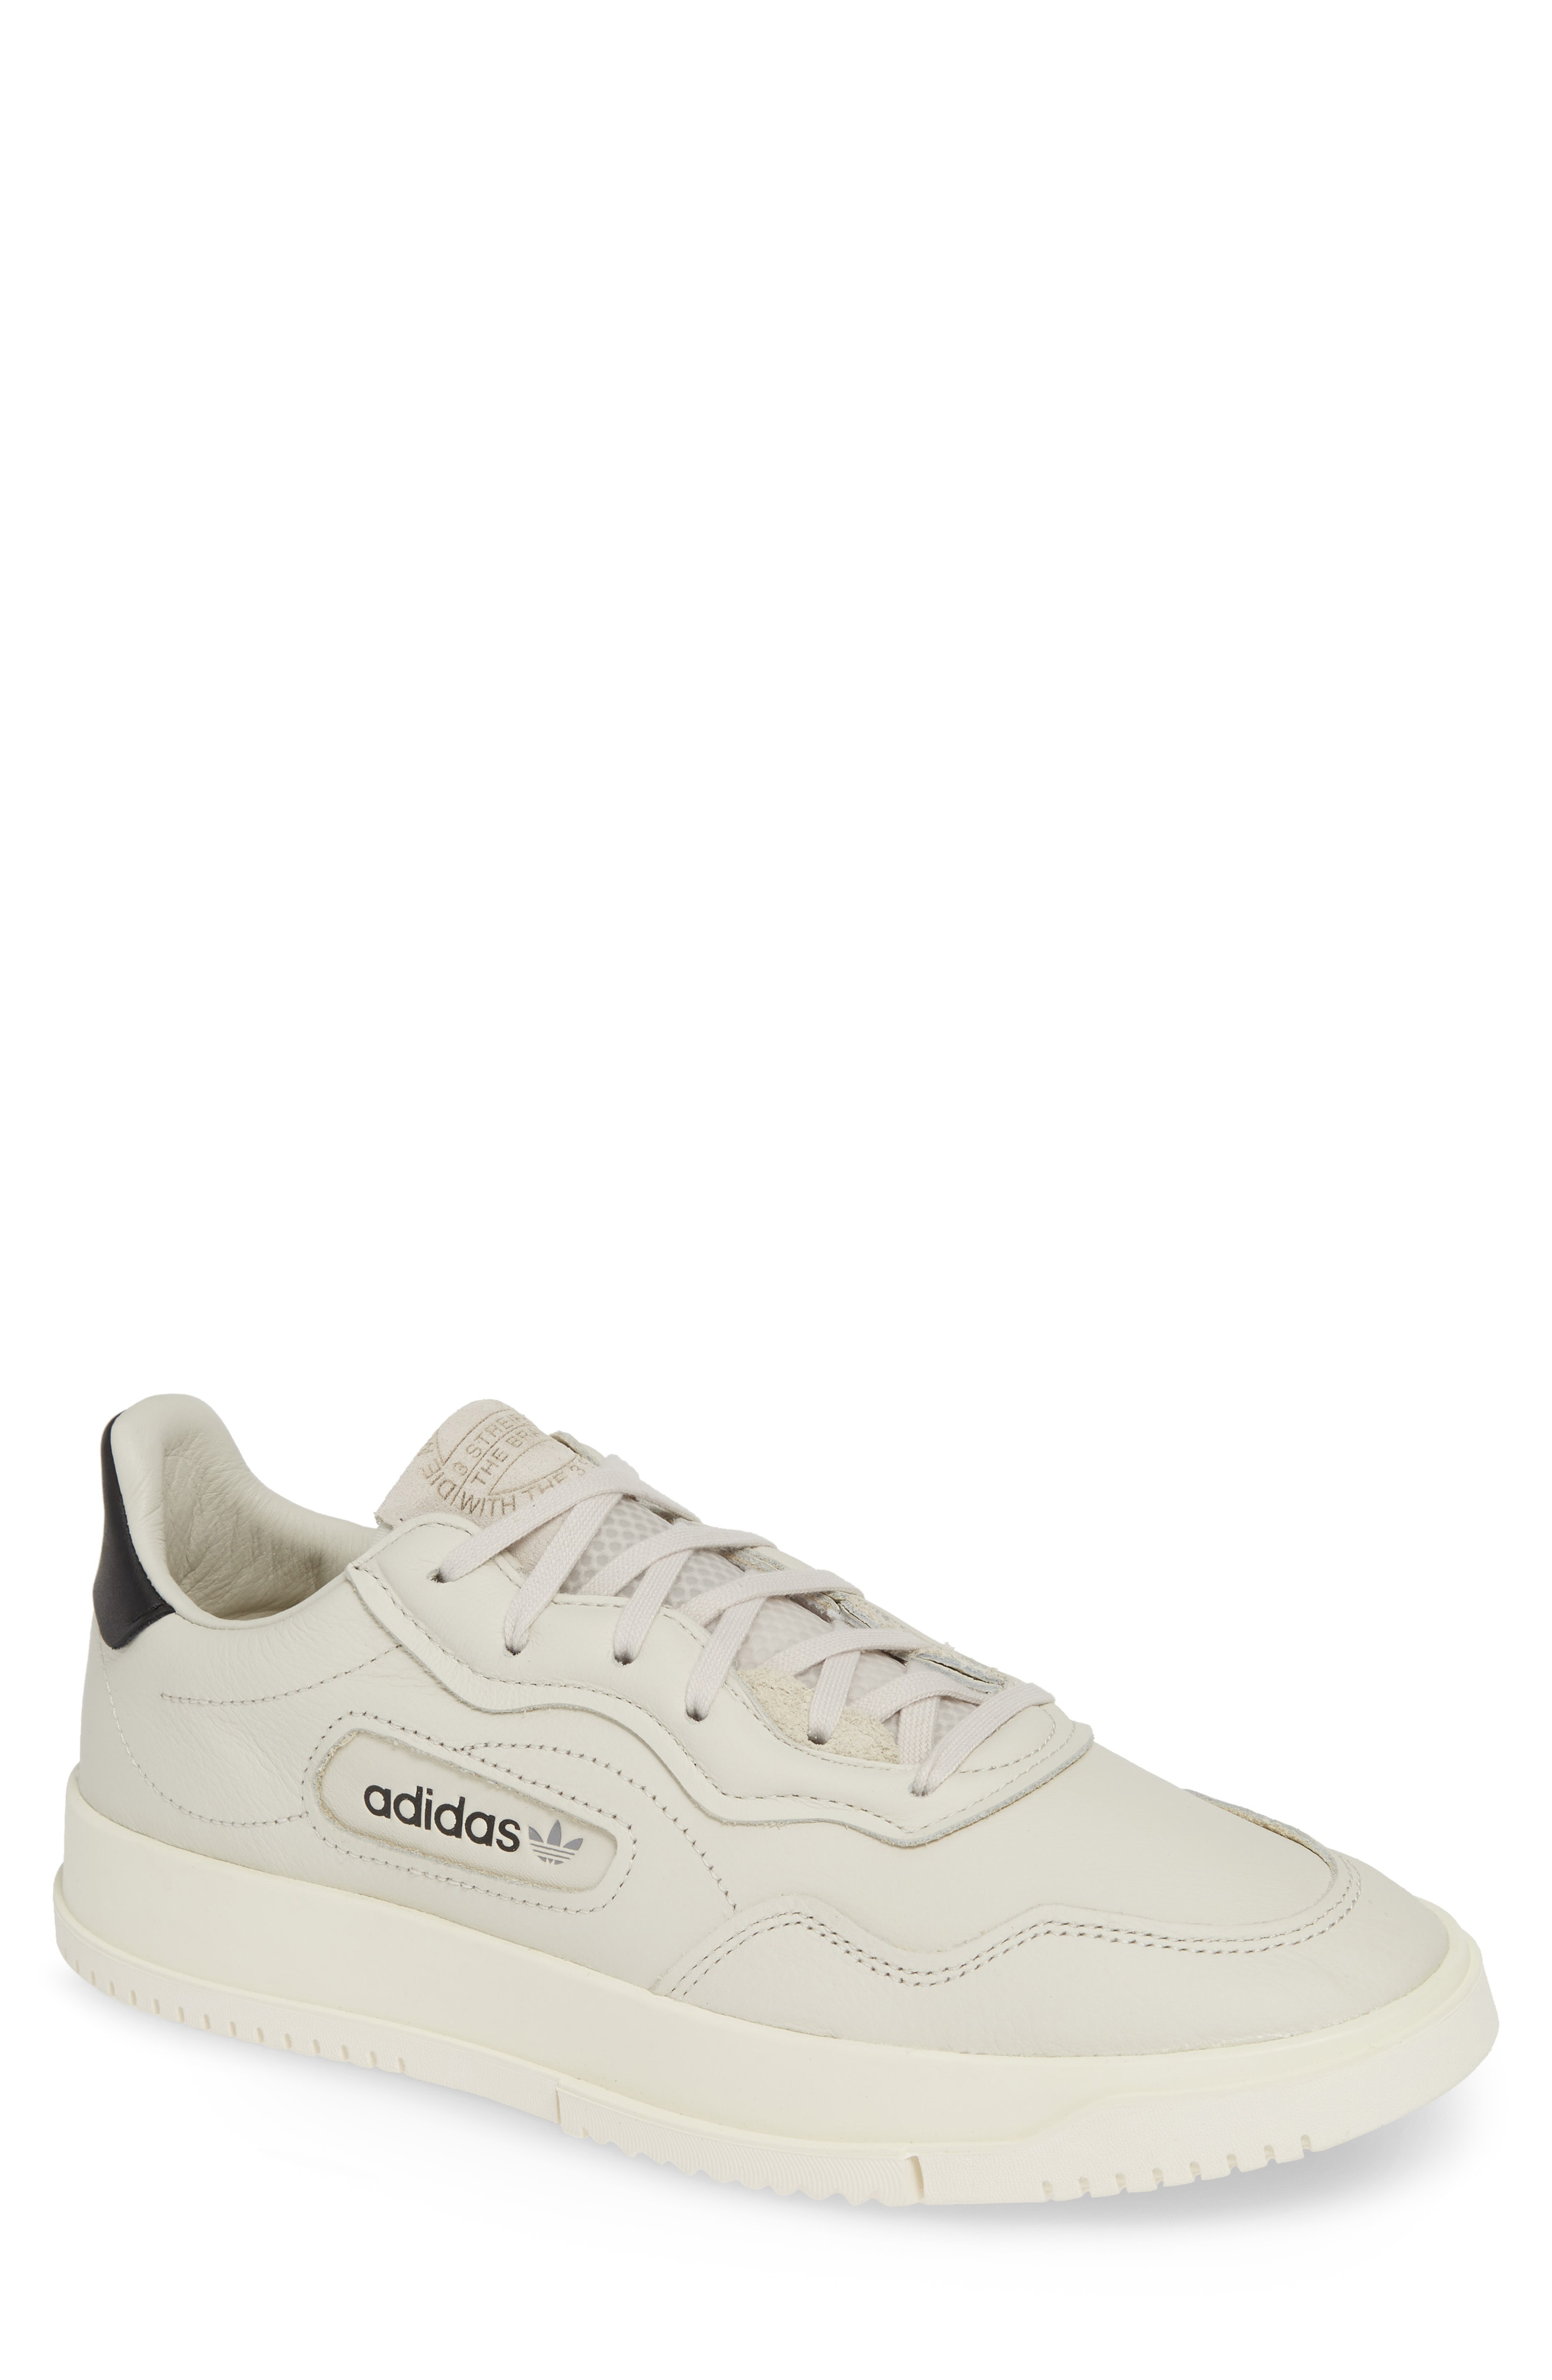 Adidas Originals Sc Premiere Sneaker In Raw White/ Chalk White | ModeSens